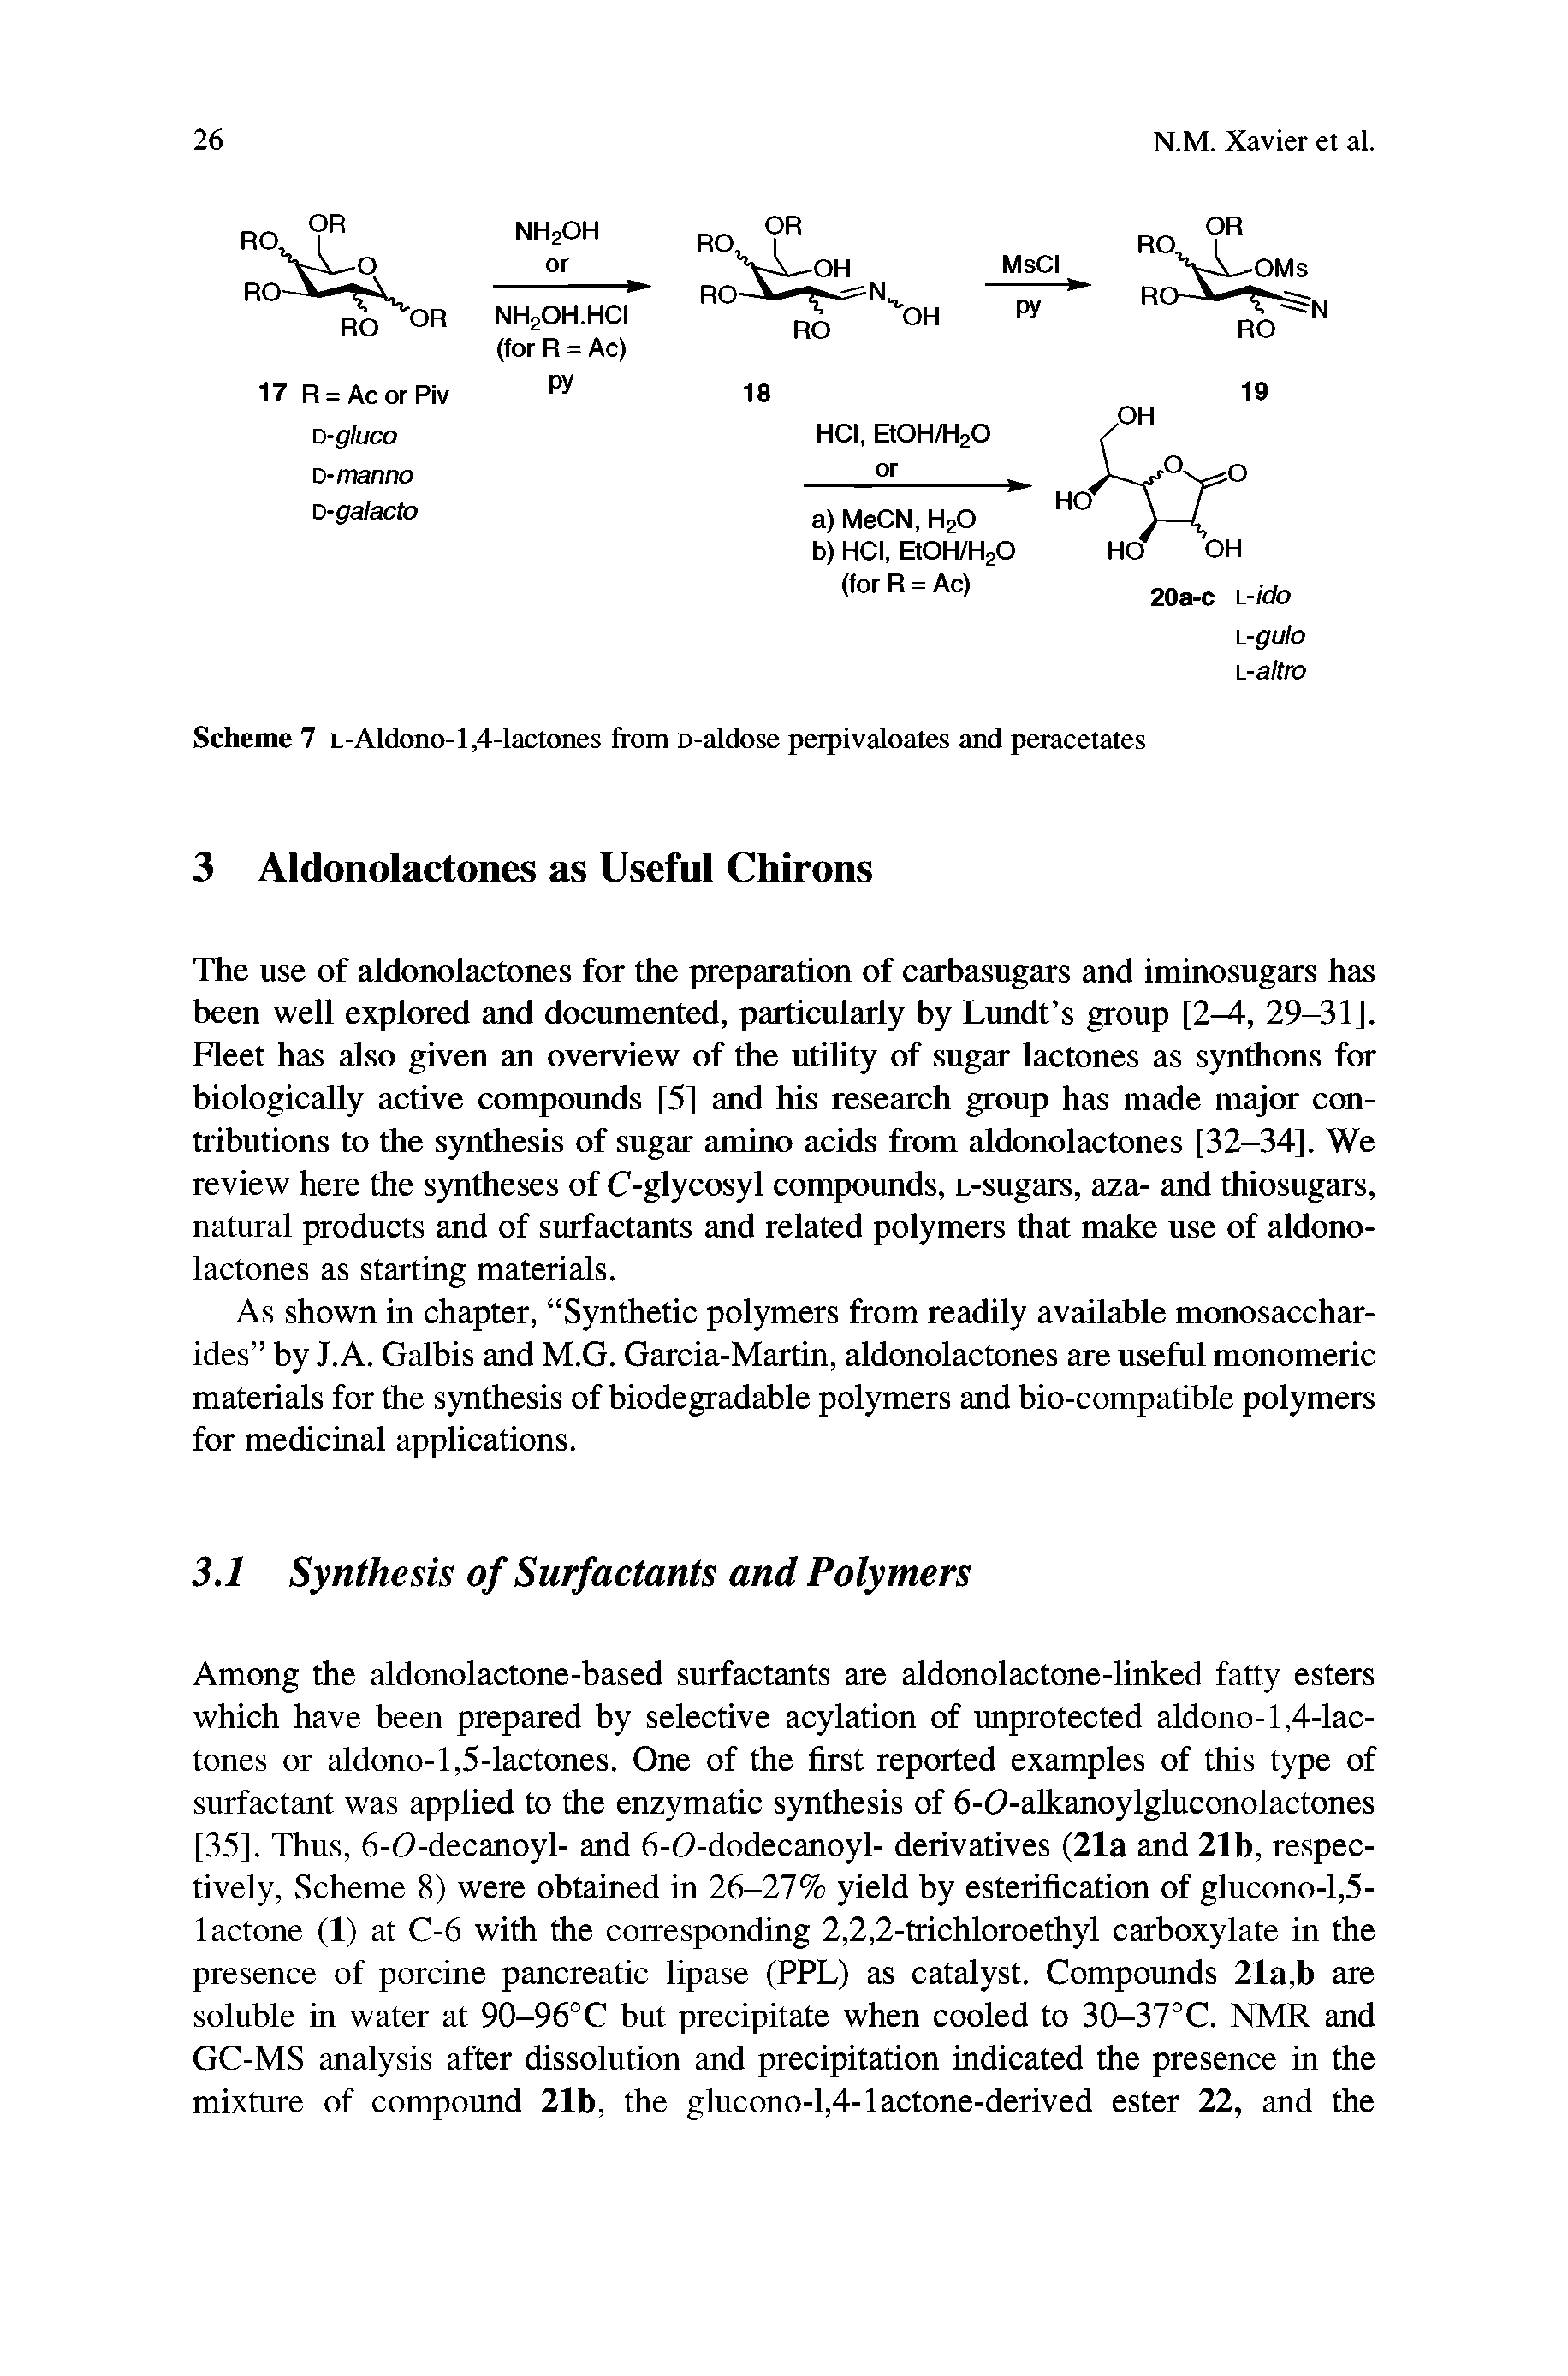 Scheme 7 L-Aldono-1,4-lactones from D-aldose perpivaloates and peracetates...